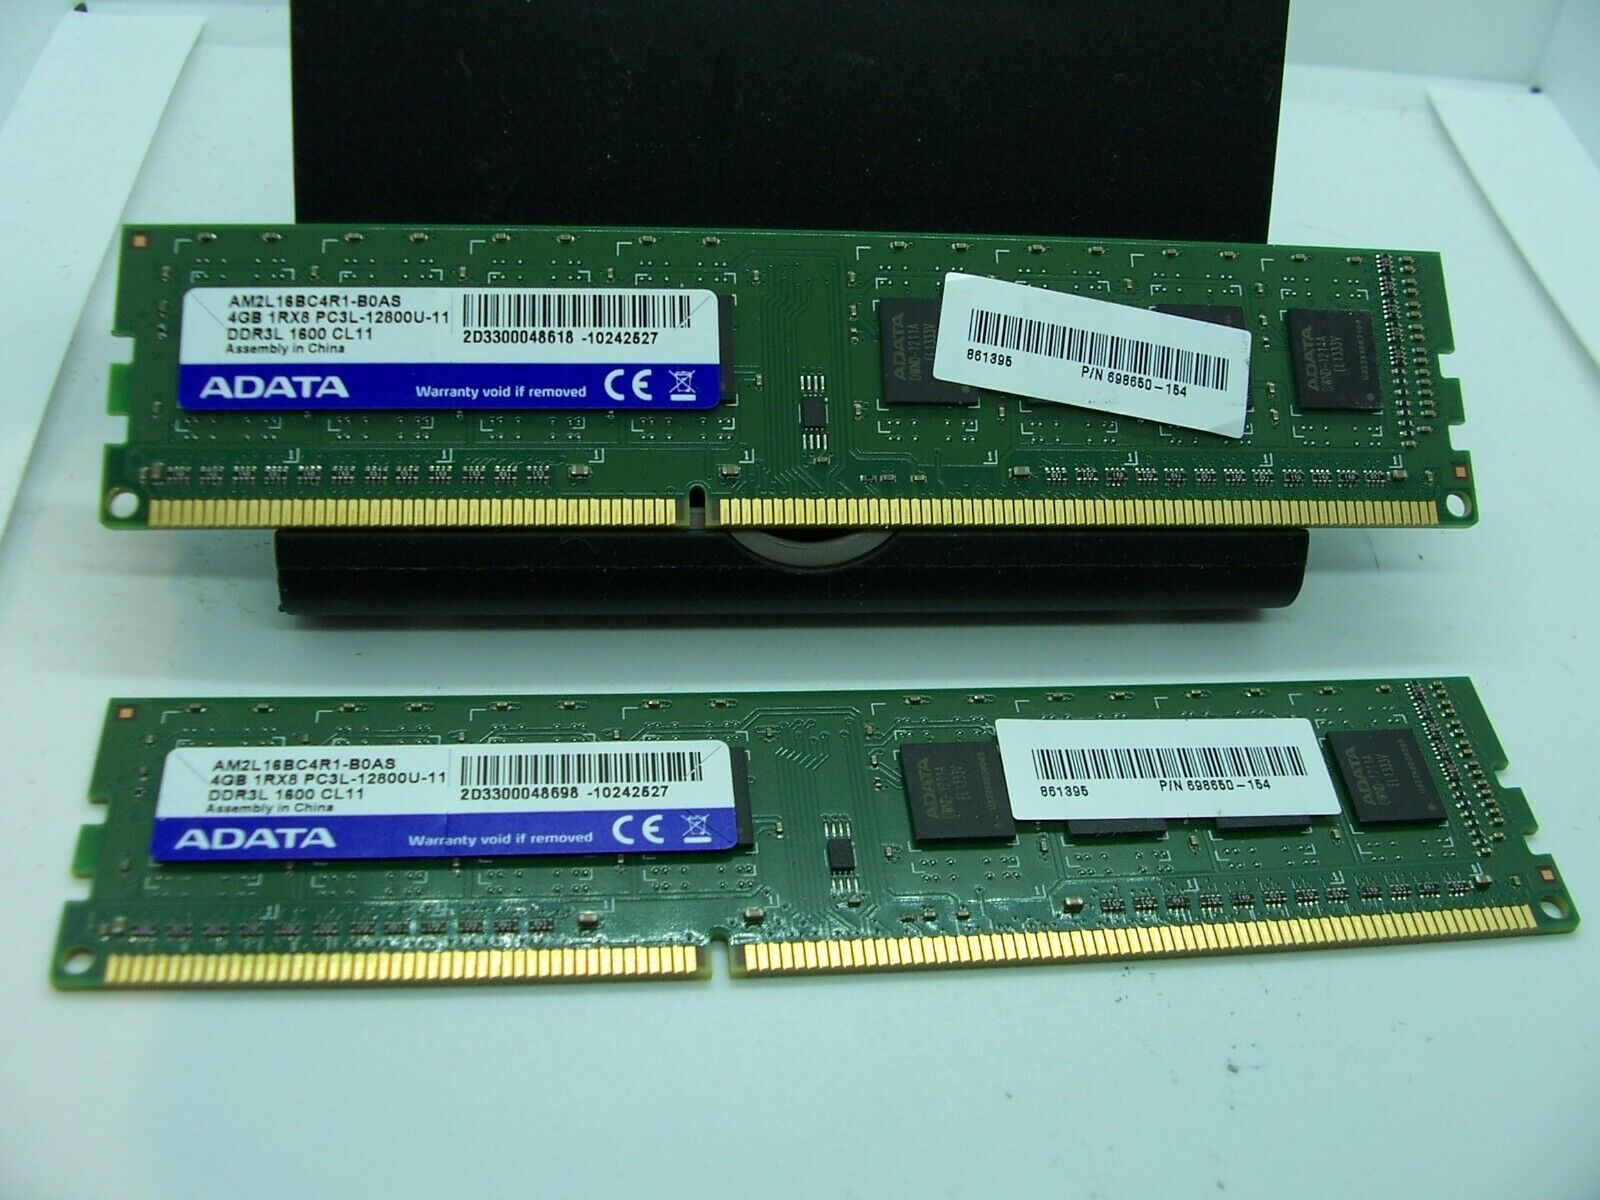 ADATA 4GB (2 PIECES) PC3-12800U DDR3L 1600 Desktop PC Memory AM2L16BC4R1-B0AS